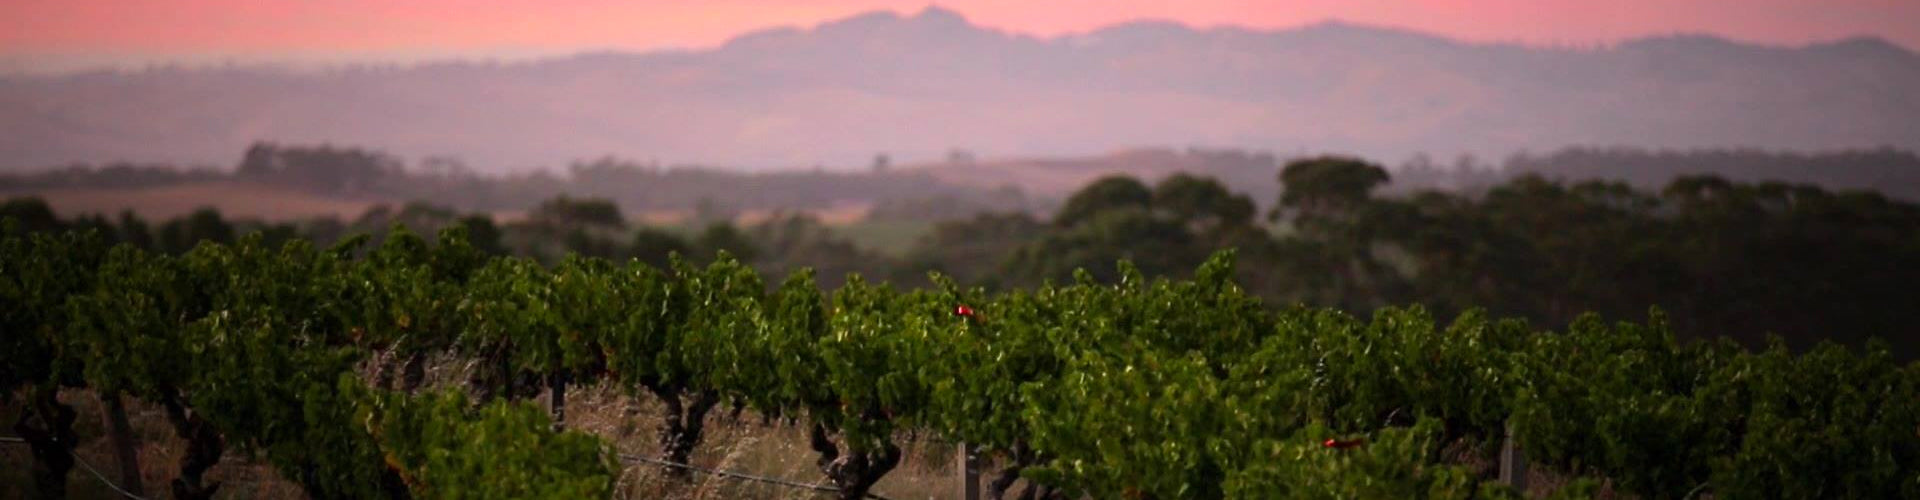 Elderton Wines Vineyard in the Barossa Valley, Australia